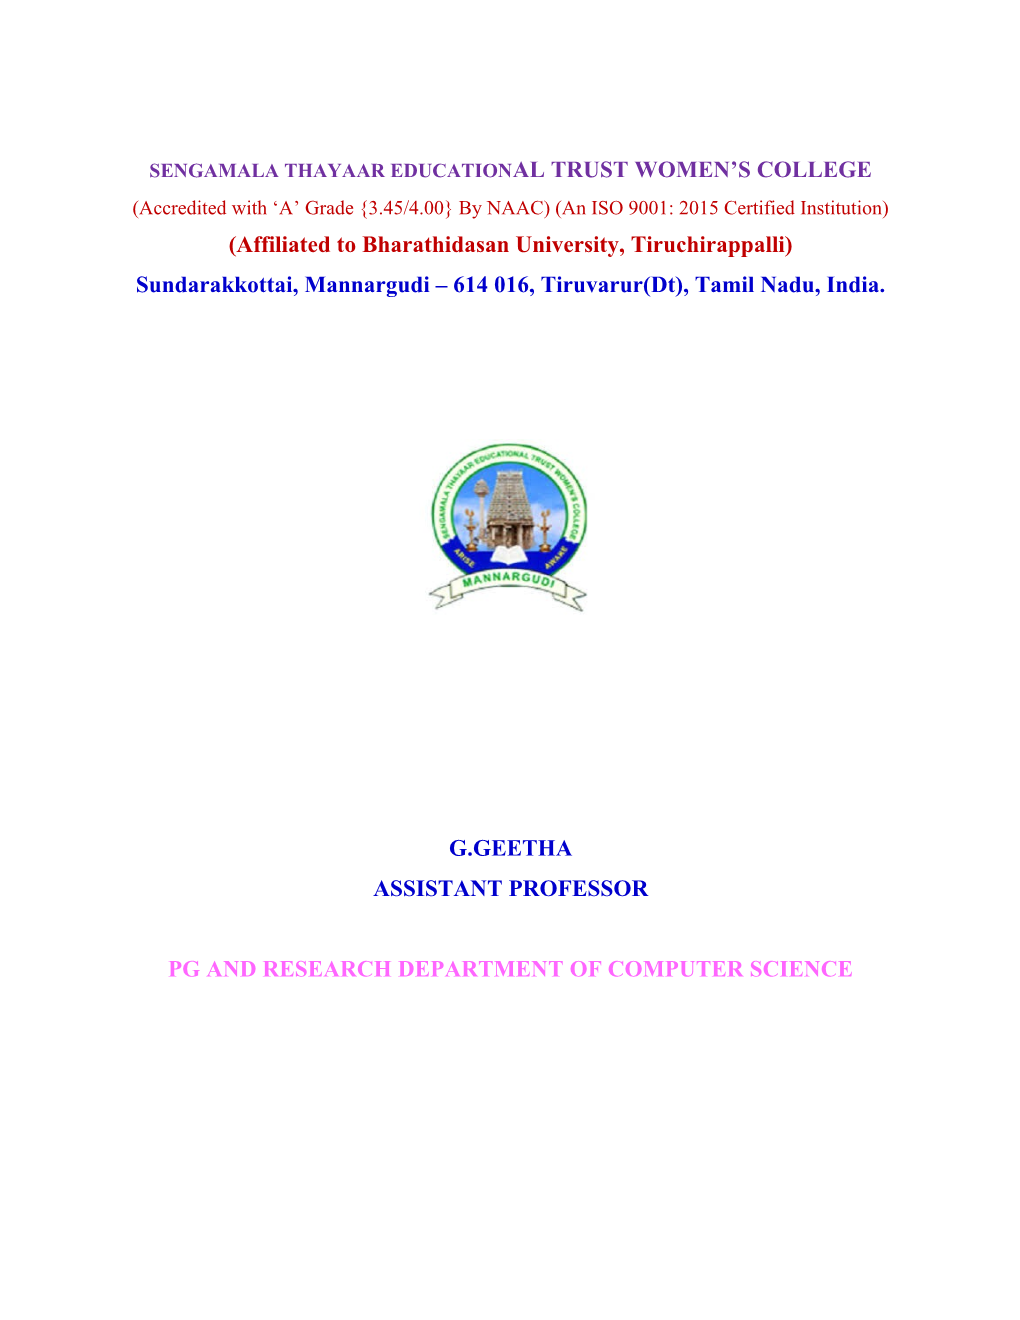 (Affiliated to Bharathidasan University, Tiruchirappalli) Sundarakkottai, Mannargudi – 614 016, Tiruvarur(Dt), Tamil Nadu, India